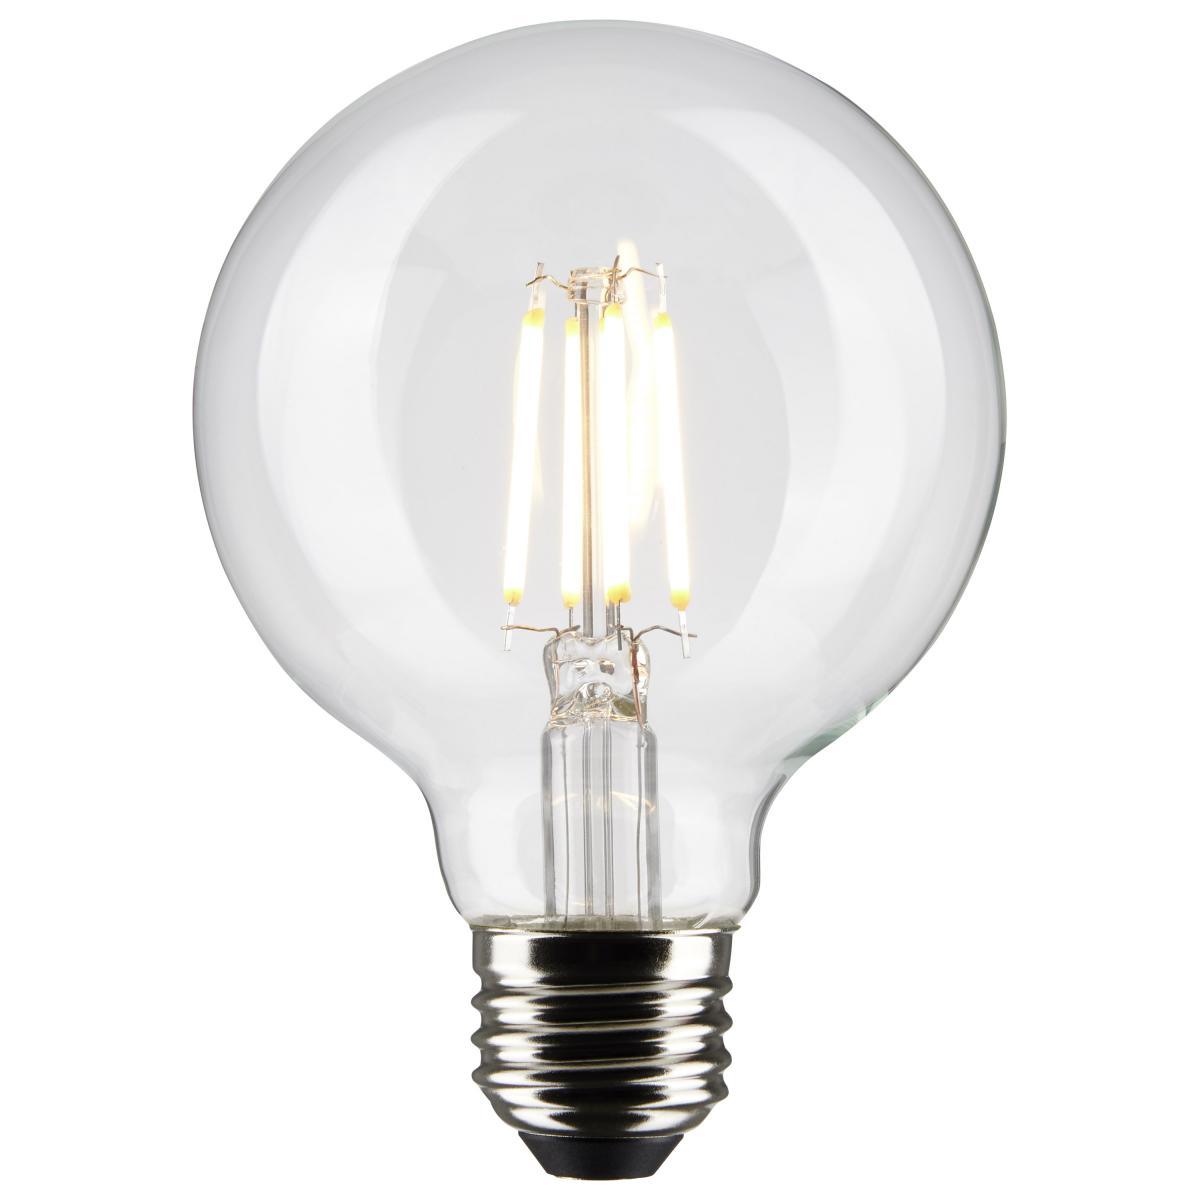 G25 Filament LED Globe Bulb, 5 Watt, 350 Lumens, 2700K, E26 Medium Base, Clear Finish, Pack Of 2 - Bees Lighting